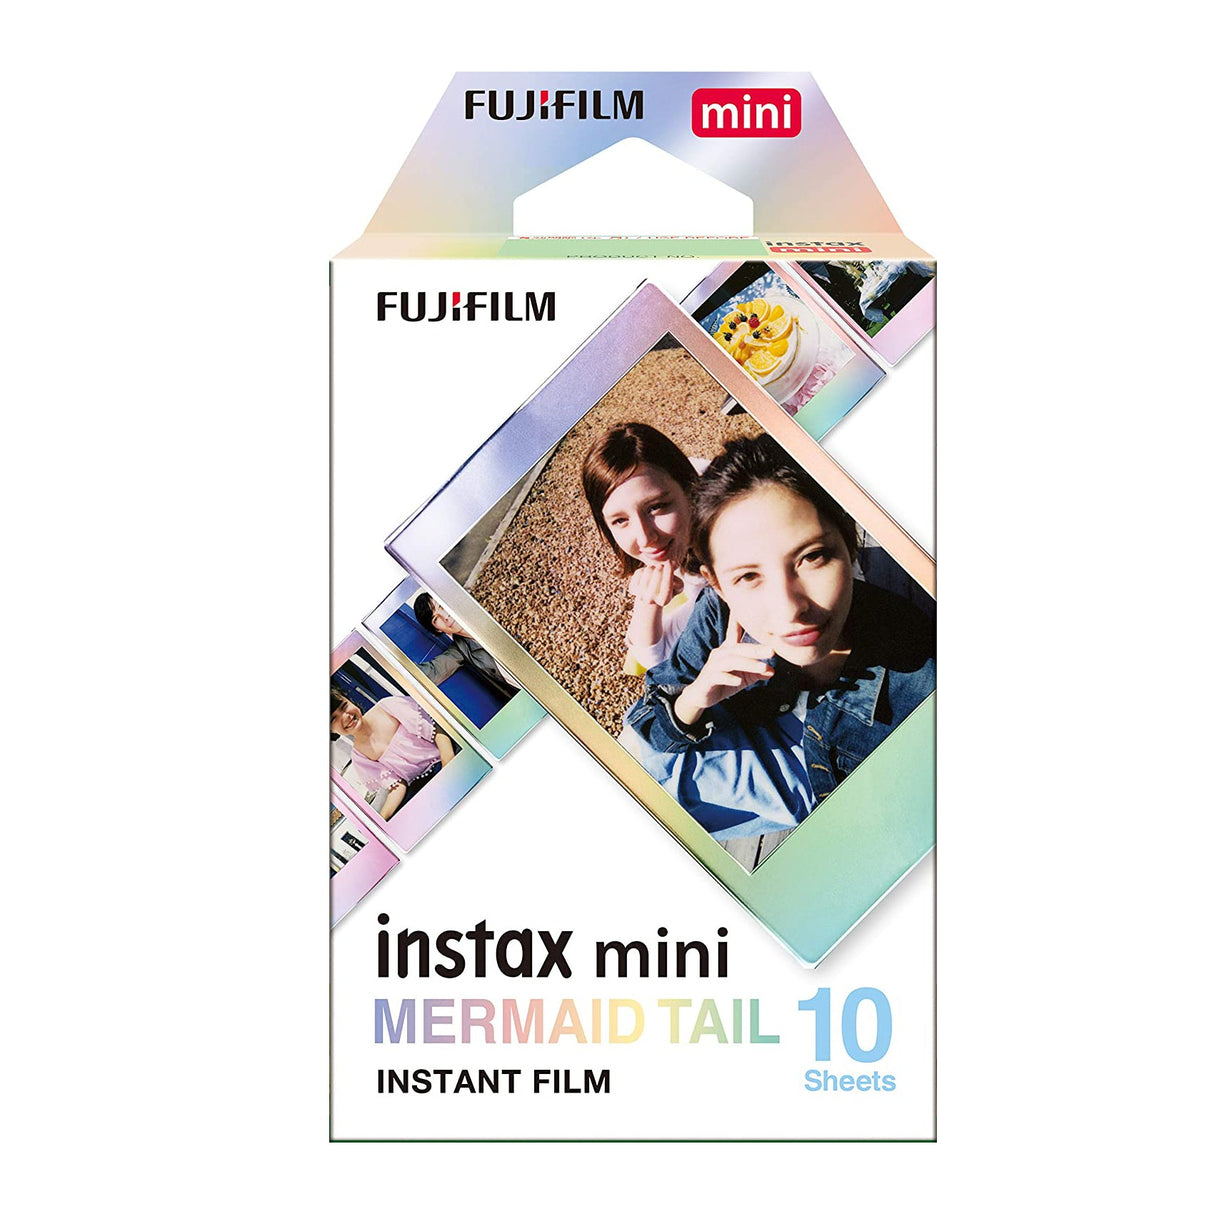 Fujifilm Instax Mini 10X1 mermaid tail Instant Film with 64-Sheets Album For Mini Film 3 inch (lce white)